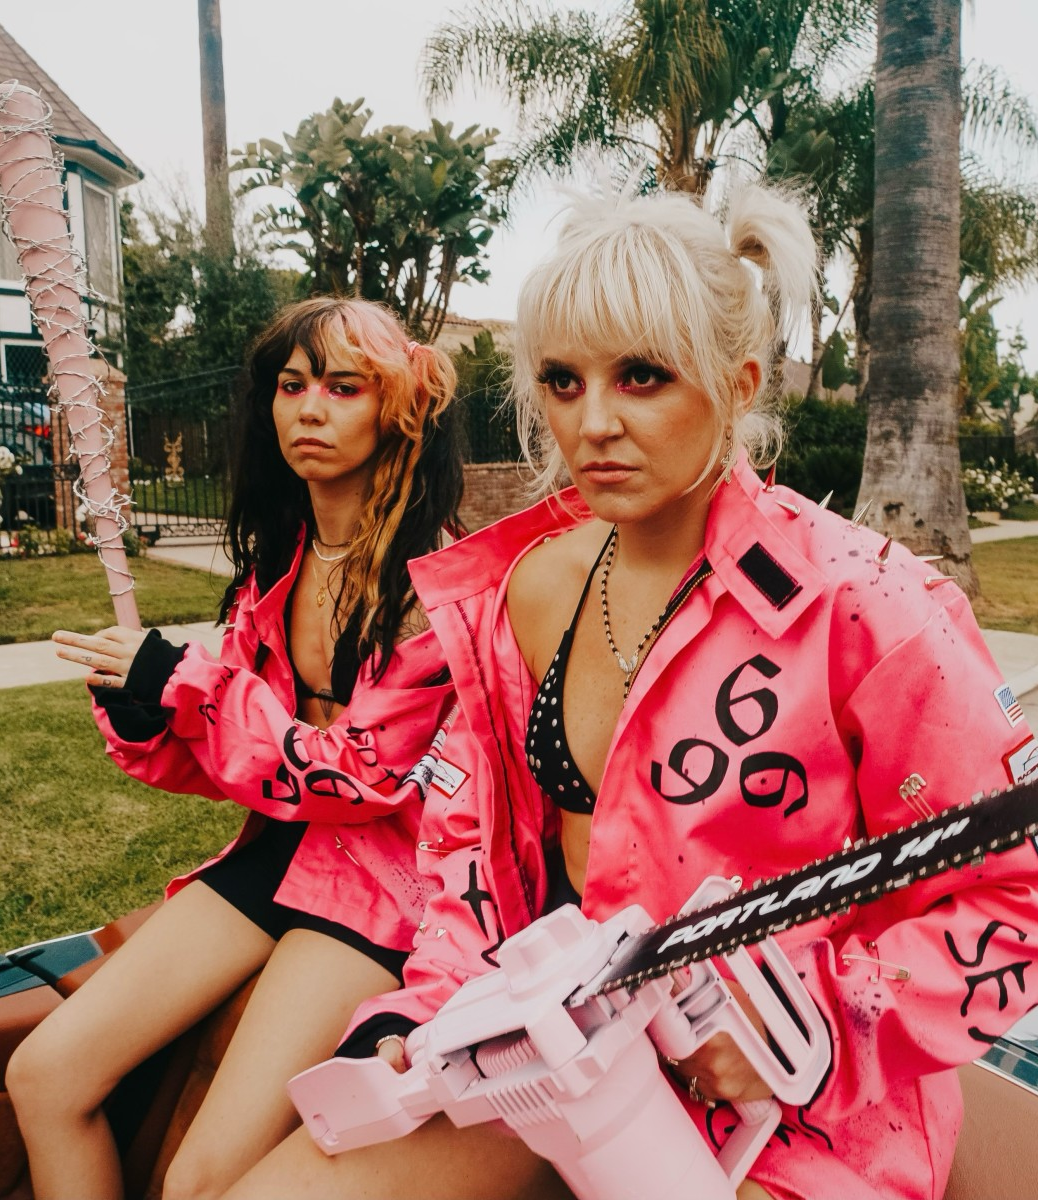 GG Magree and Mija's So Tuff So Cute Release Punk-Inspired Debut Single, "Break Stuff" – EDM.com